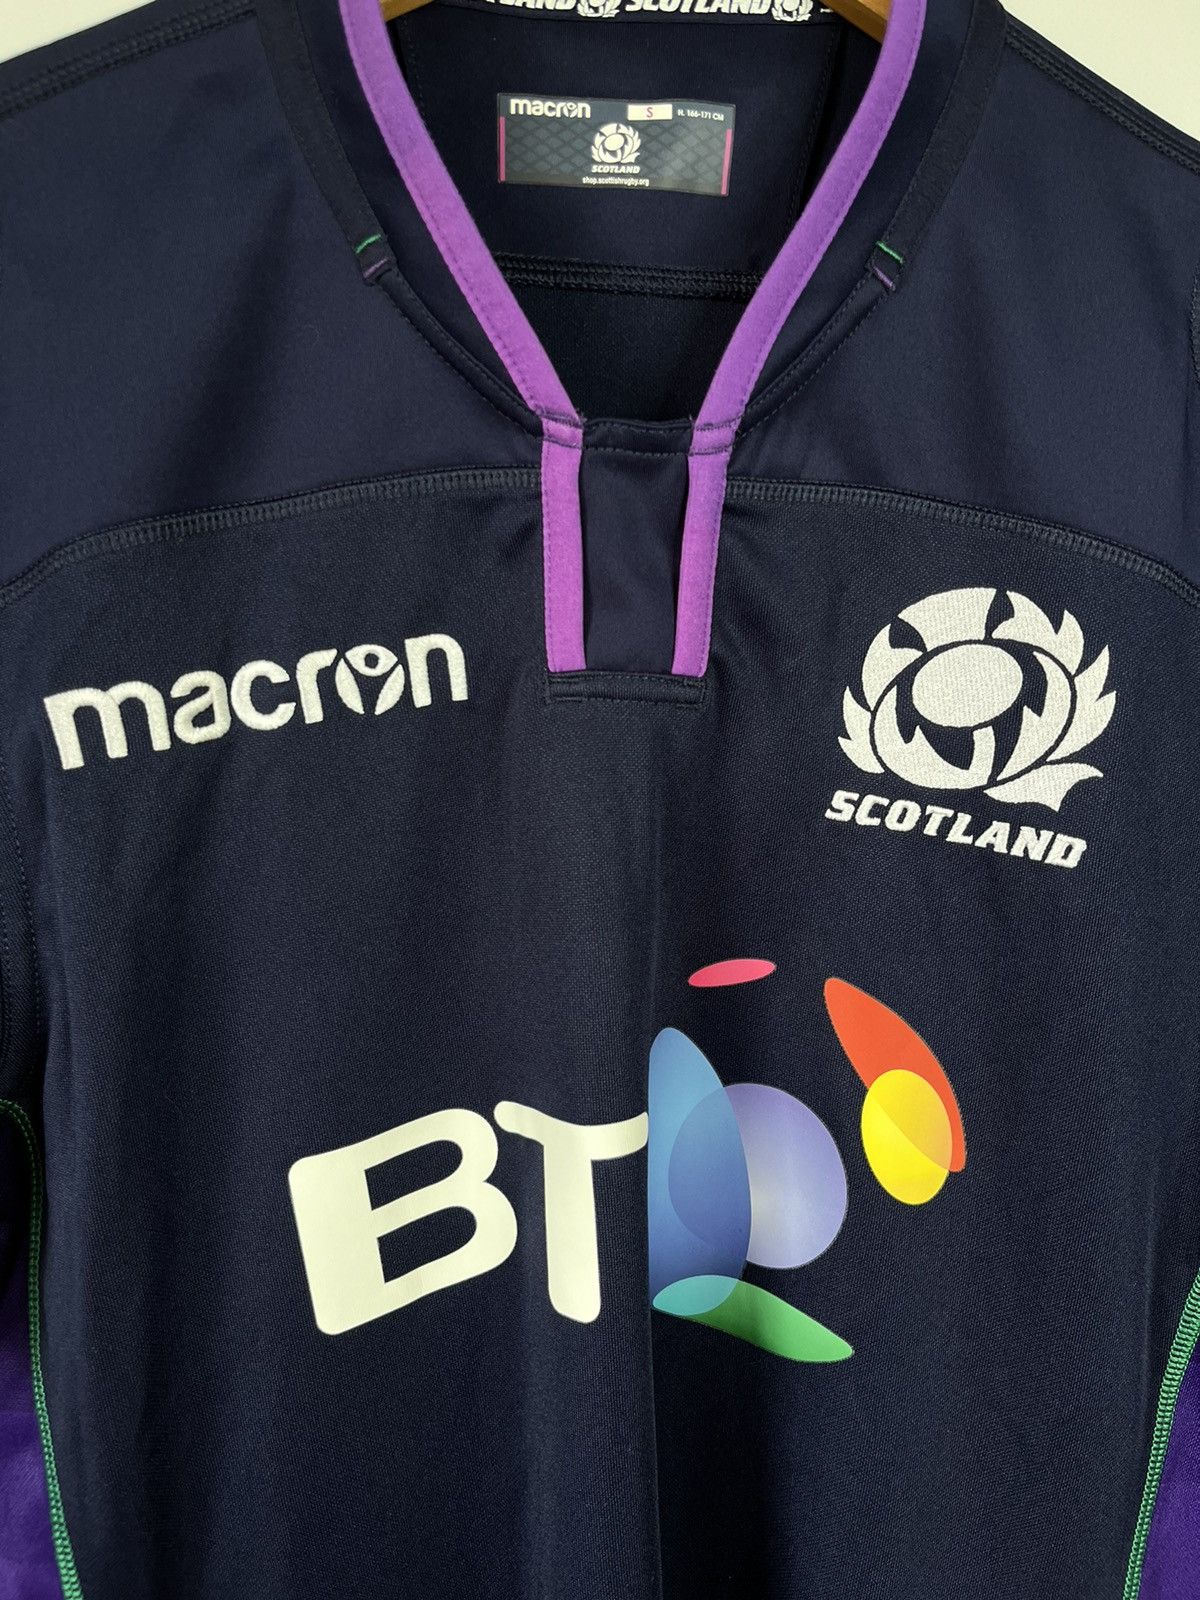 Jersey Scotland National Team Rugby Jersey Shirt Macron Size S Size US S / EU 44-46 / 1 - 3 Thumbnail